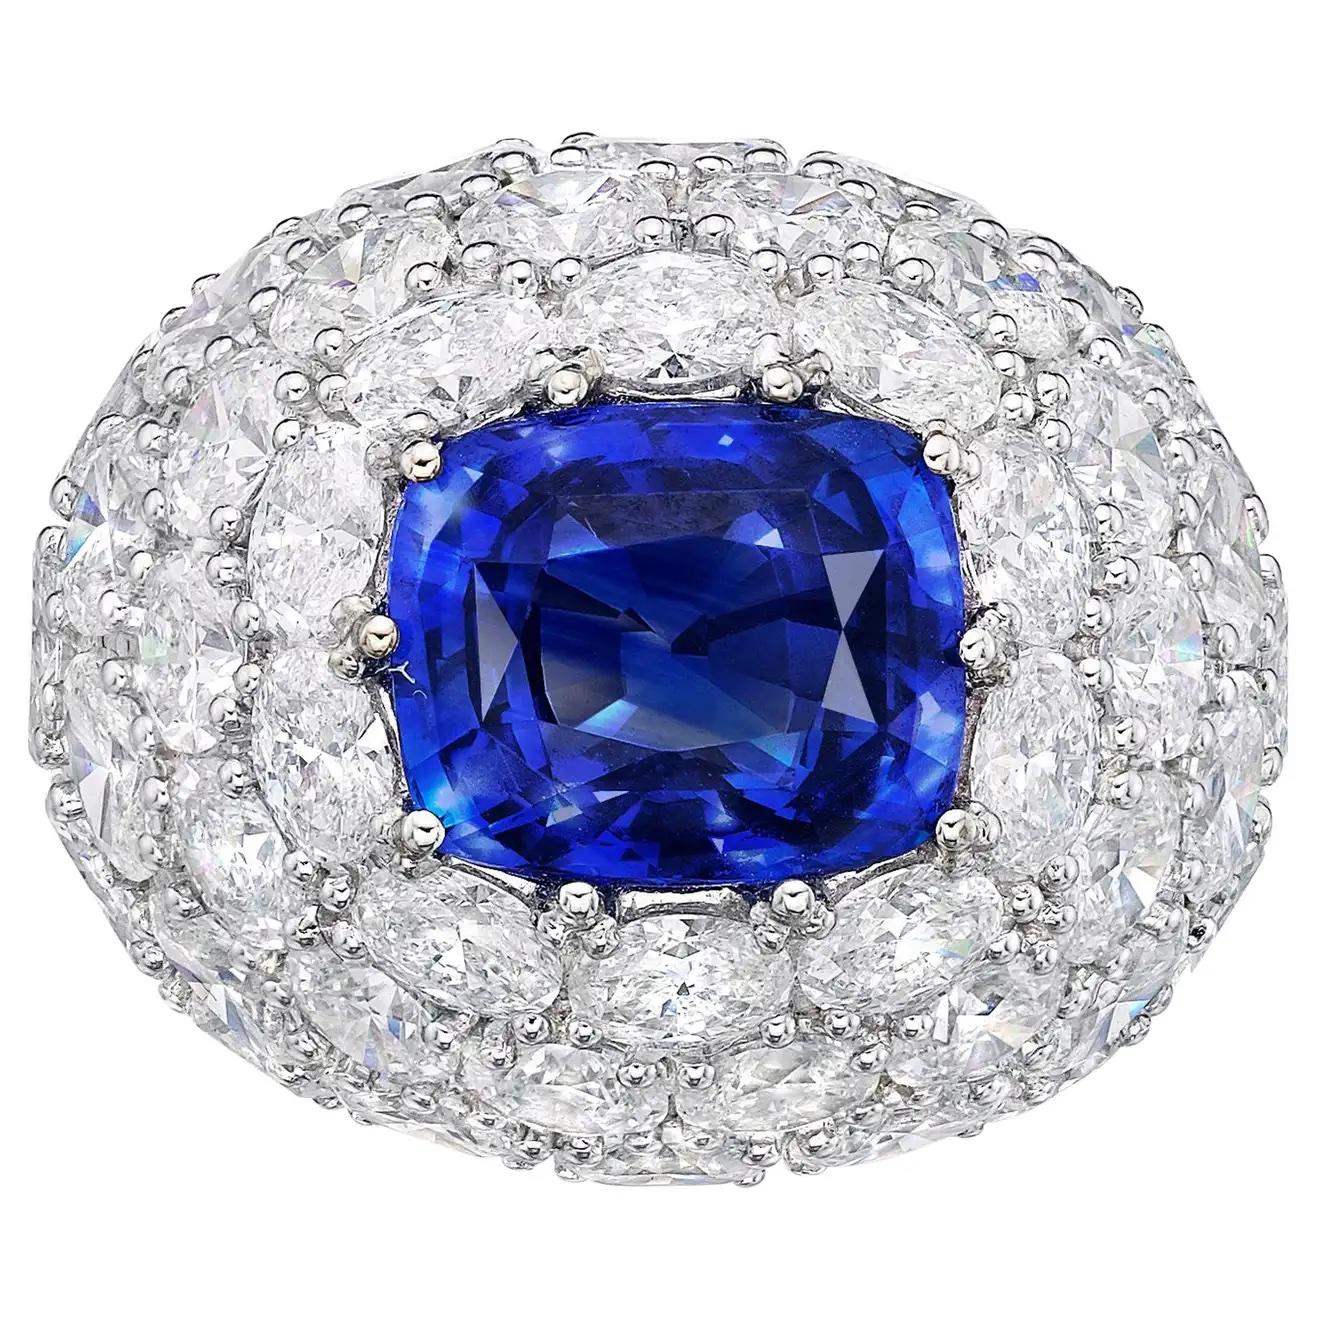 Primary Stone: Sapphire ( Sri Lanka )
Shape : Oval Cut
Sapphire Weight: 7.96 Carats
Measurements Sapphire: 11.65mm x 9.80mm x 6.88mm
Color: Royal Blue
Accent Stones: Genuine Diamond
Shape Or Cut Diamond: Numerous Round Brilliants
Average